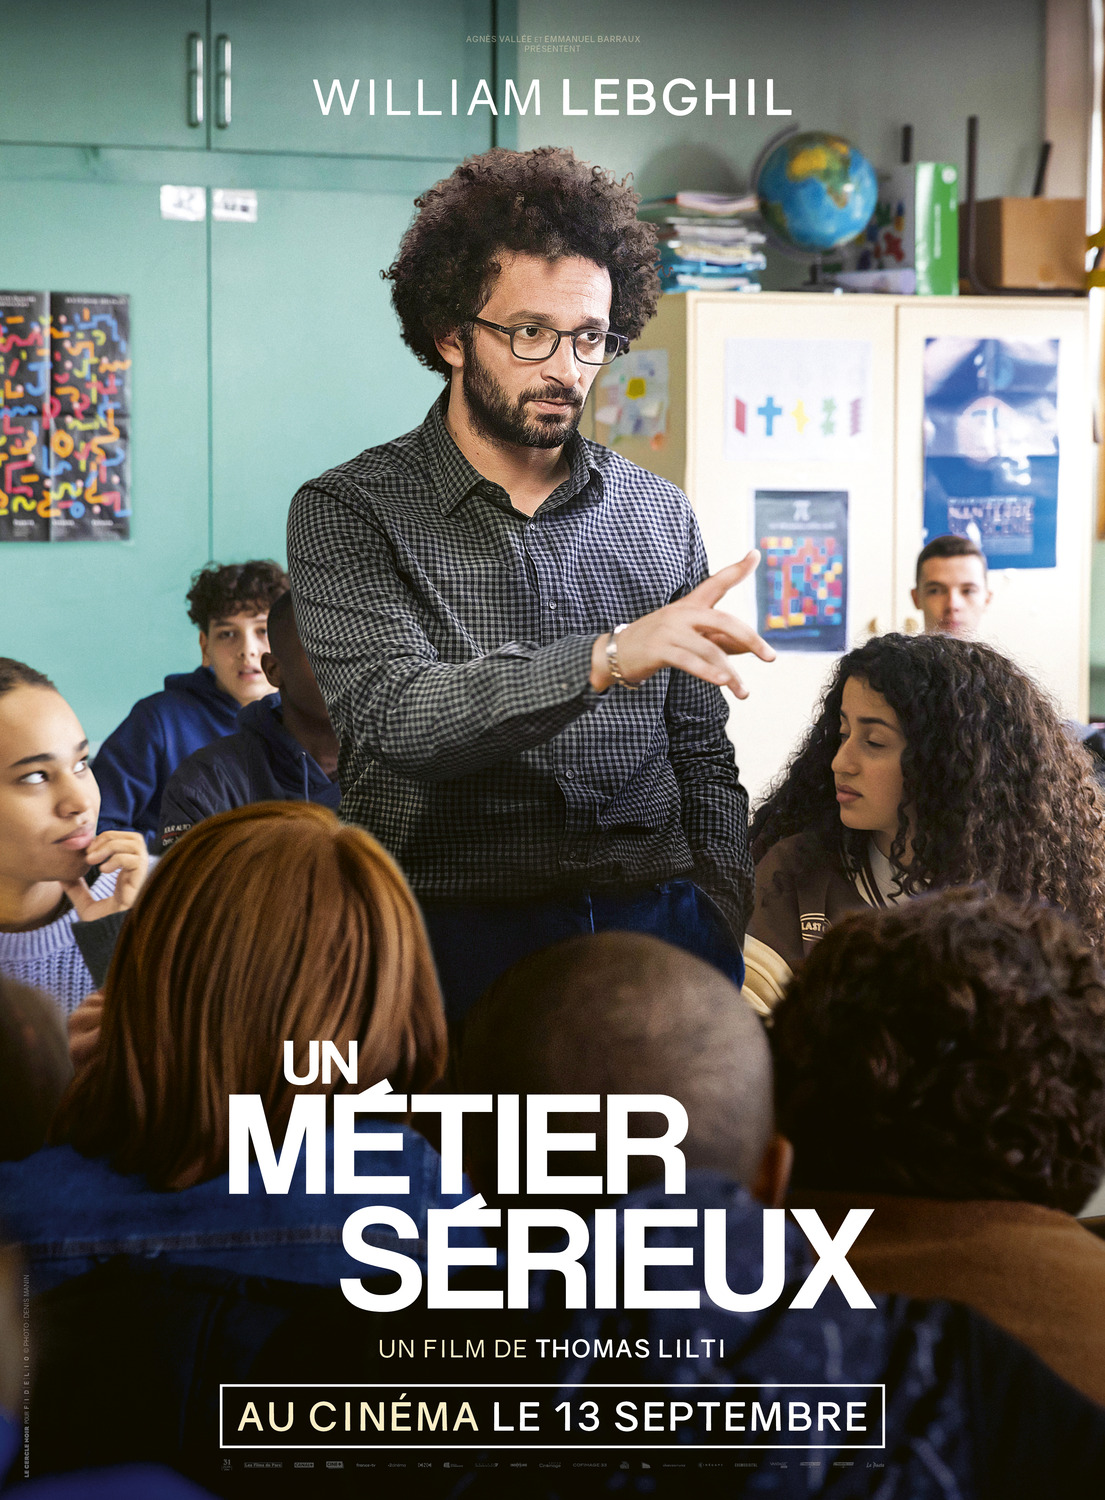 Extra Large Movie Poster Image for Un métier sérieux (#6 of 7)